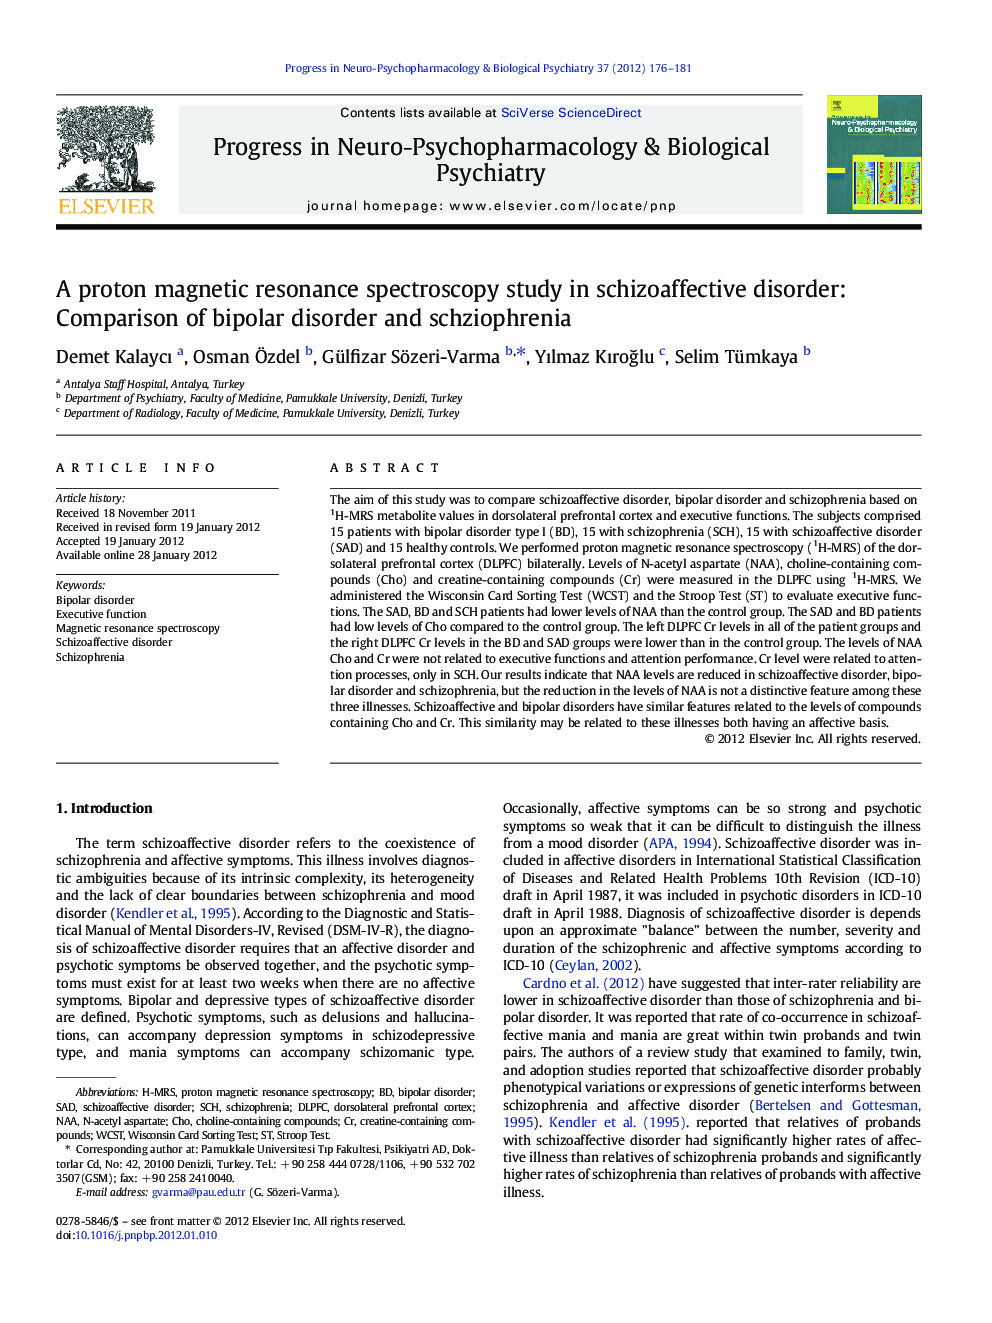 A proton magnetic resonance spectroscopy study in schizoaffective disorder: Comparison of bipolar disorder and schziophrenia